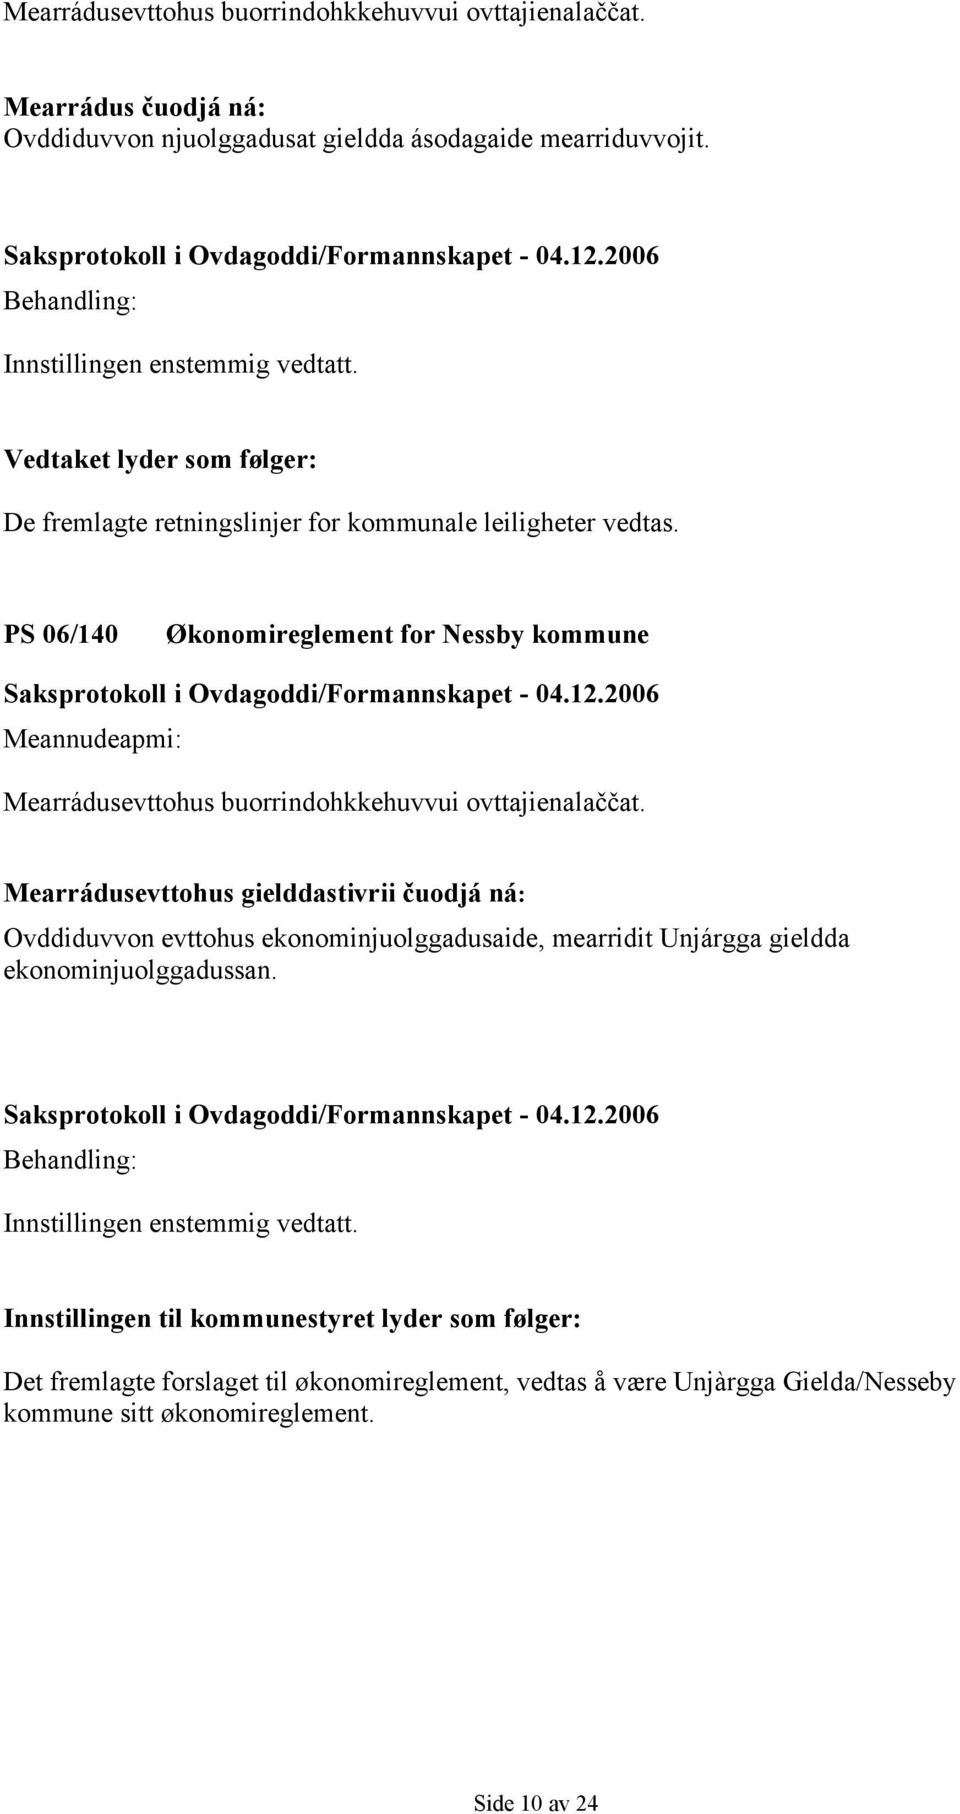 PS 06/140 Økonomireglement for Nessby kommune Mearrádusevttohus gielddastivrii čuodjá ná: Ovddiduvvon evttohus